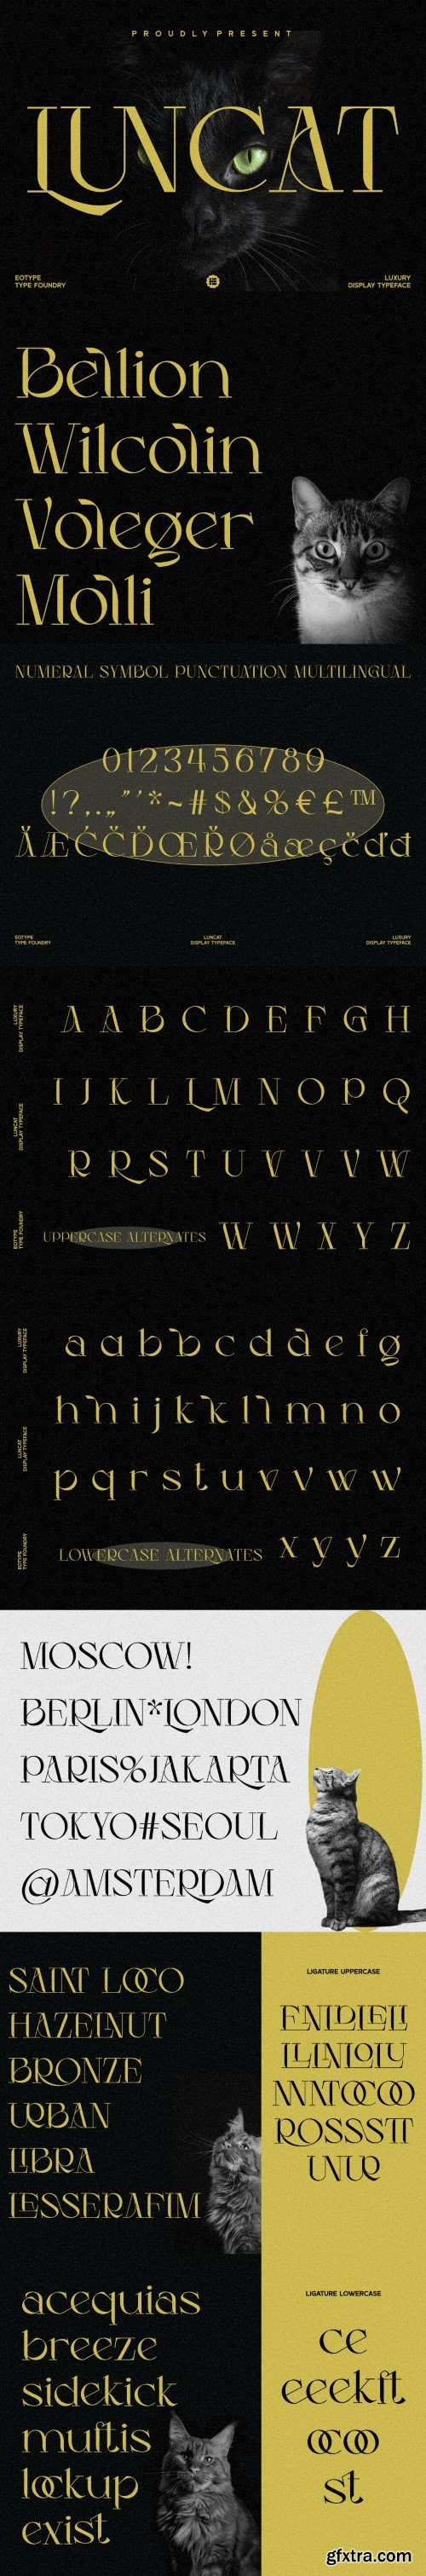 Luncat Display Typeface